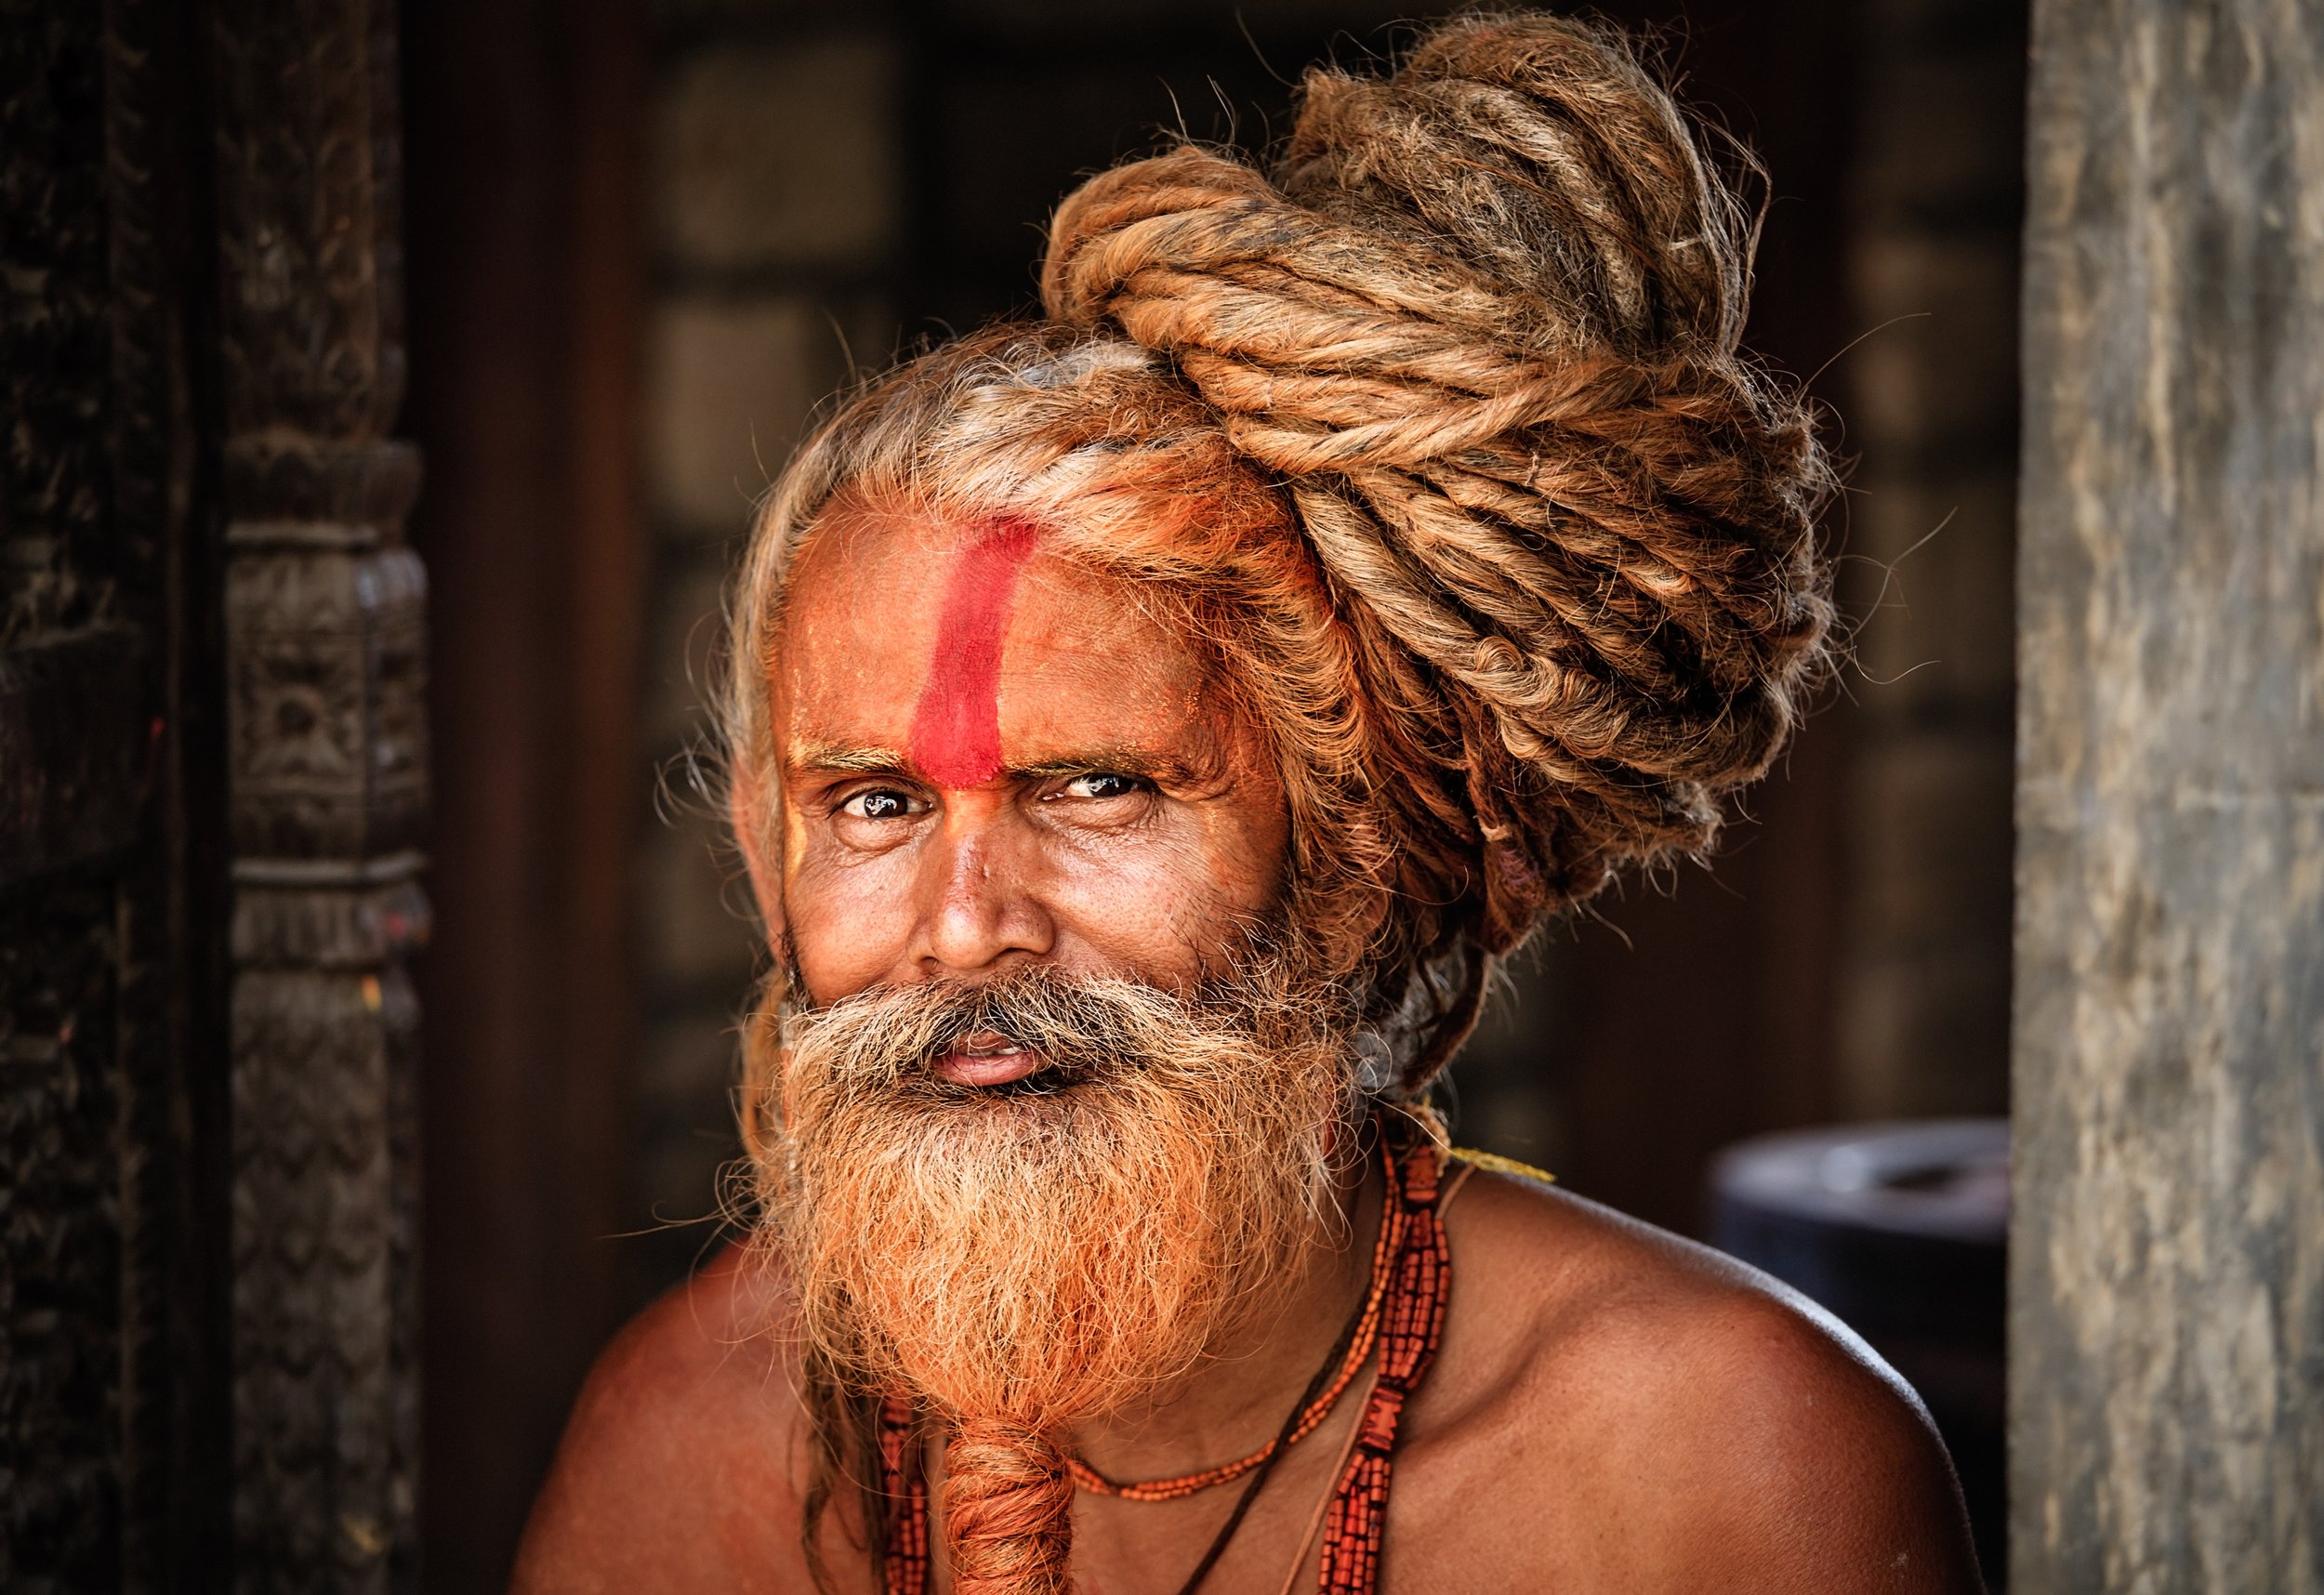 Indian Man with Dreadlocks.jpg